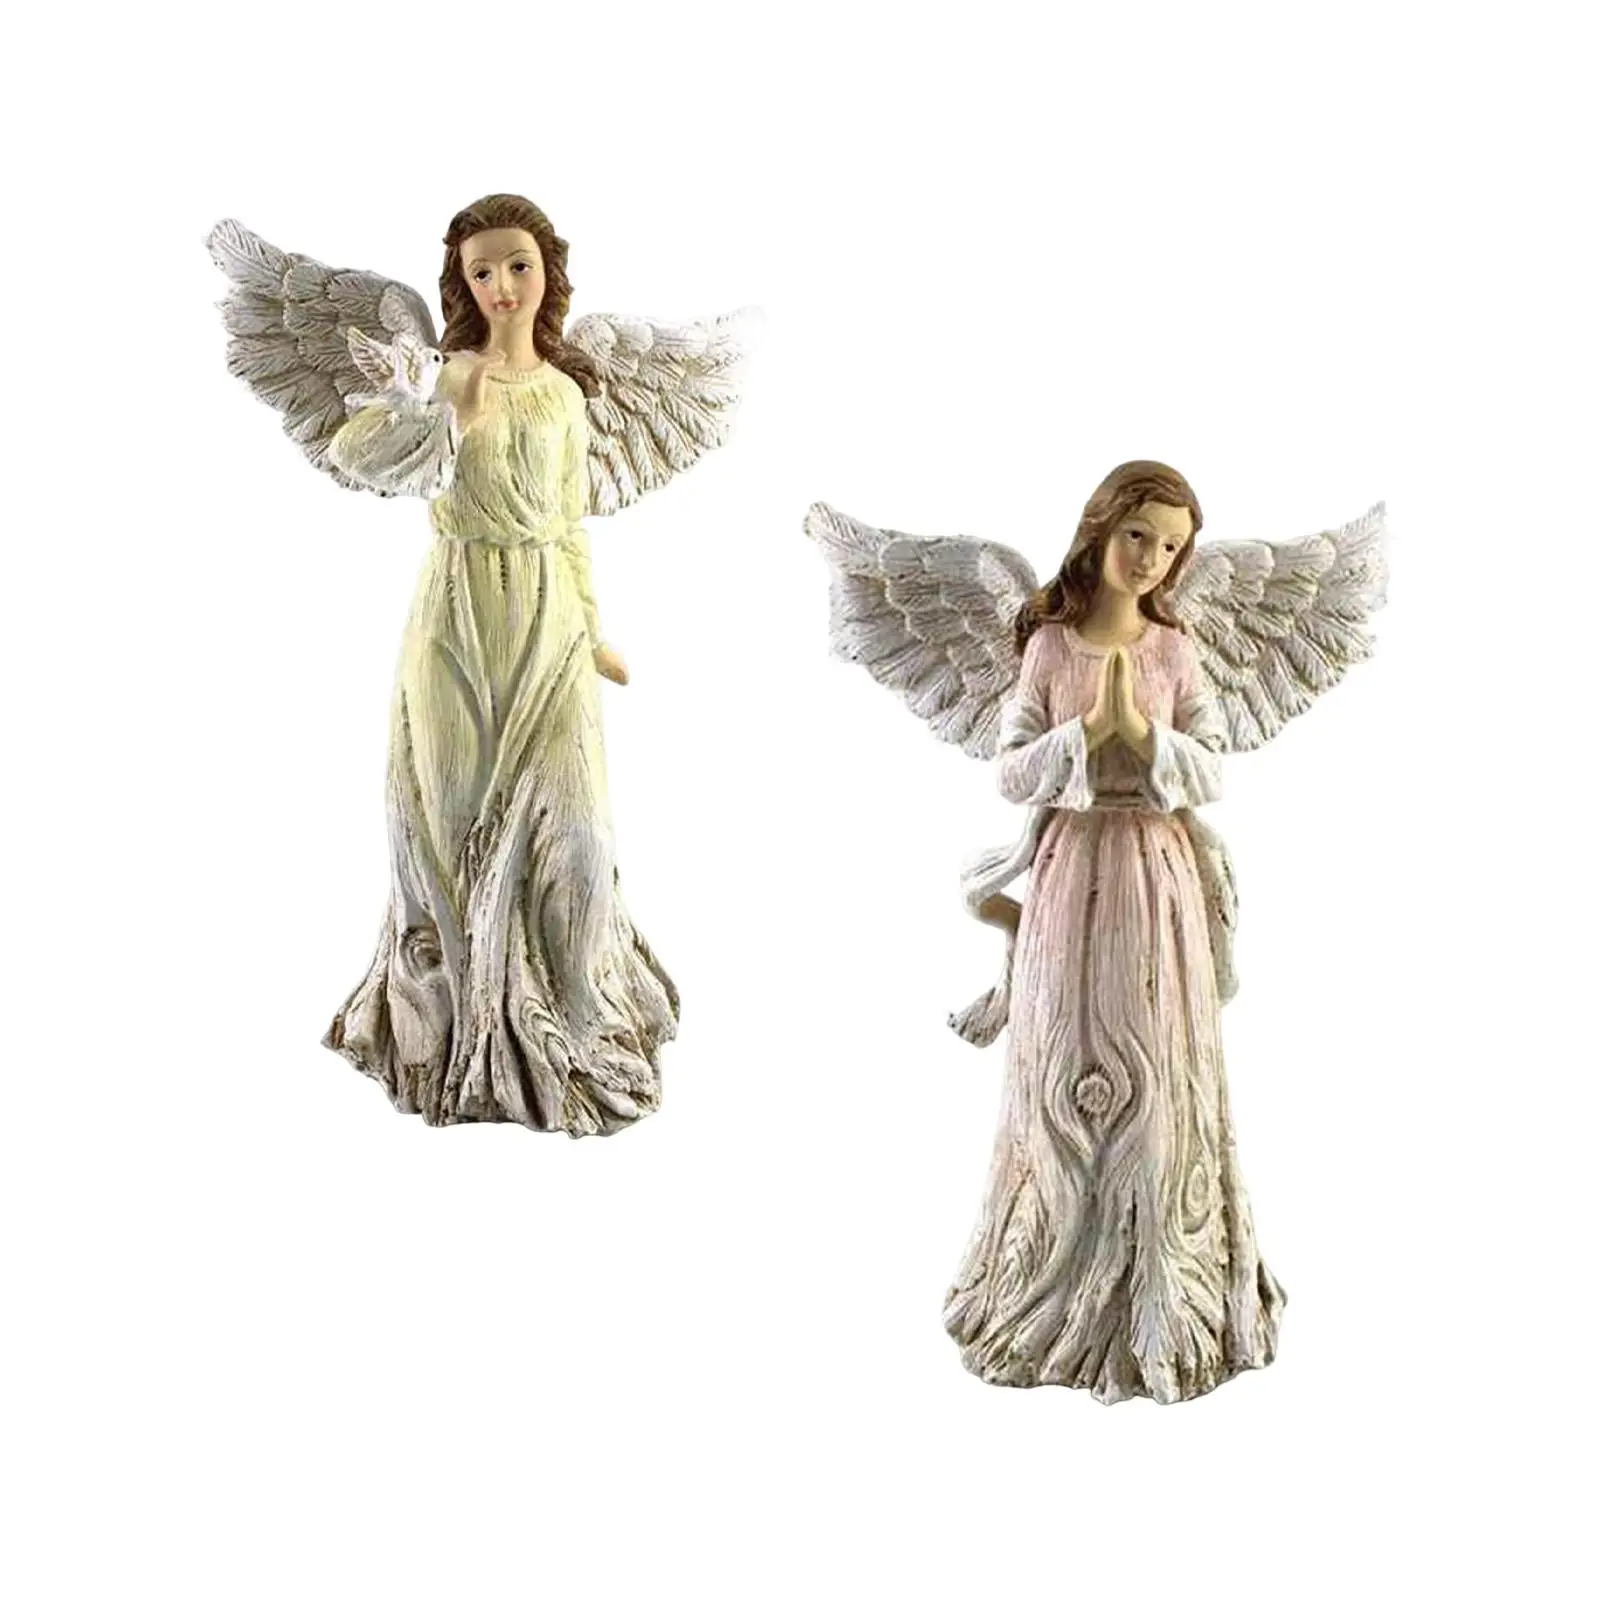 Miniature Angel Statue Resin Desktop Ornaments Art Crafts Handmade Modern Nordic Exquisite Details Art Ornaments for Pathway